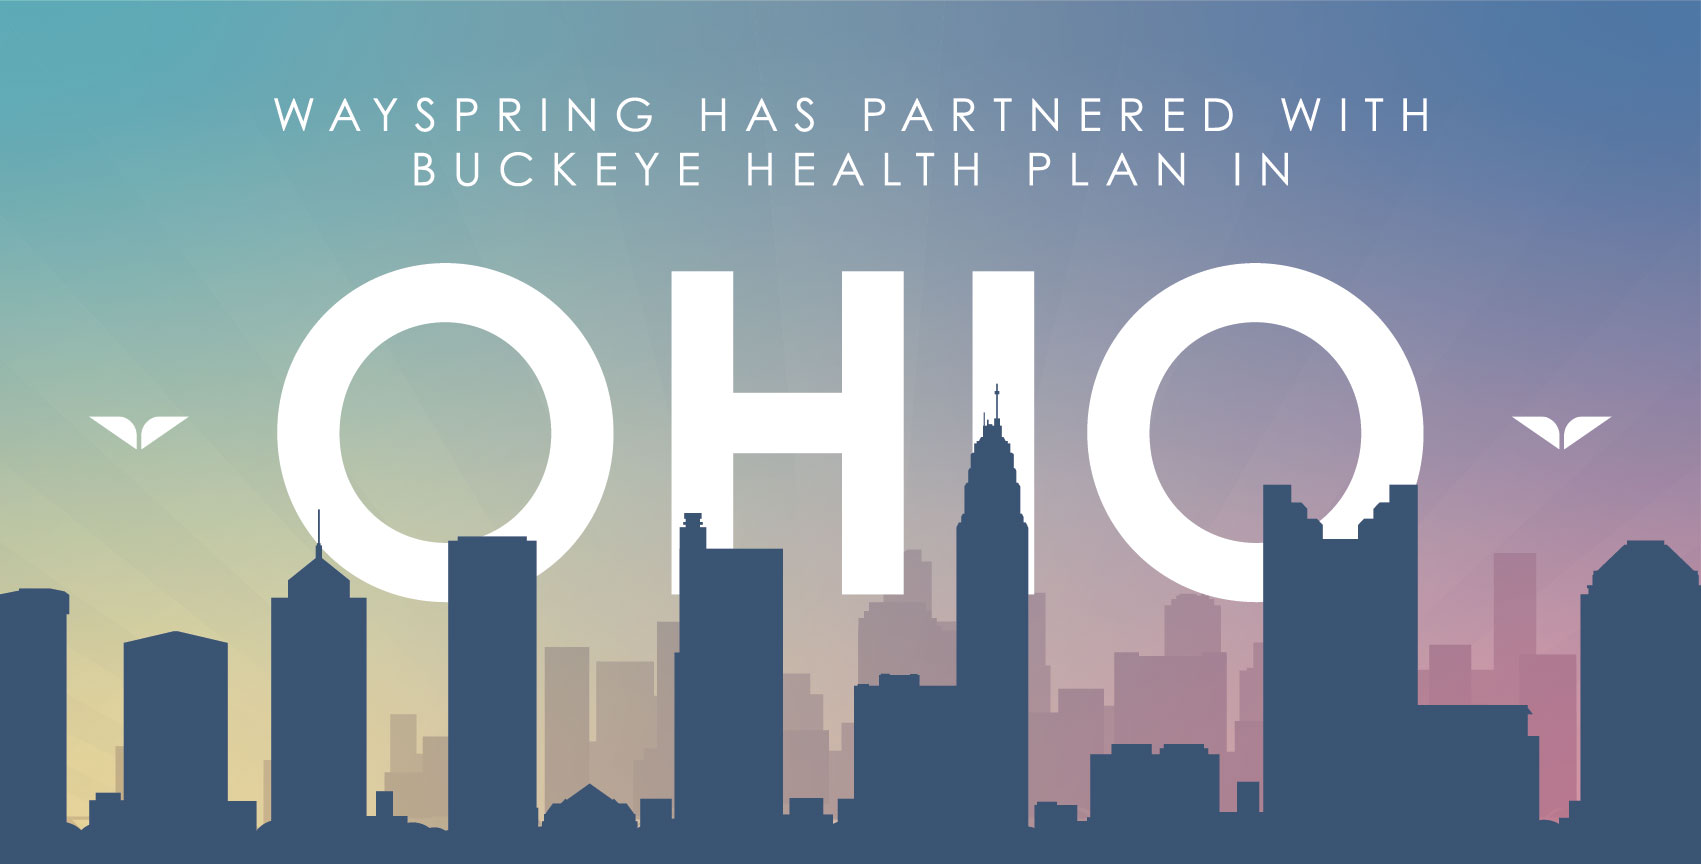 Wayspring has partnered with Buckeye Health Plan in Ohio